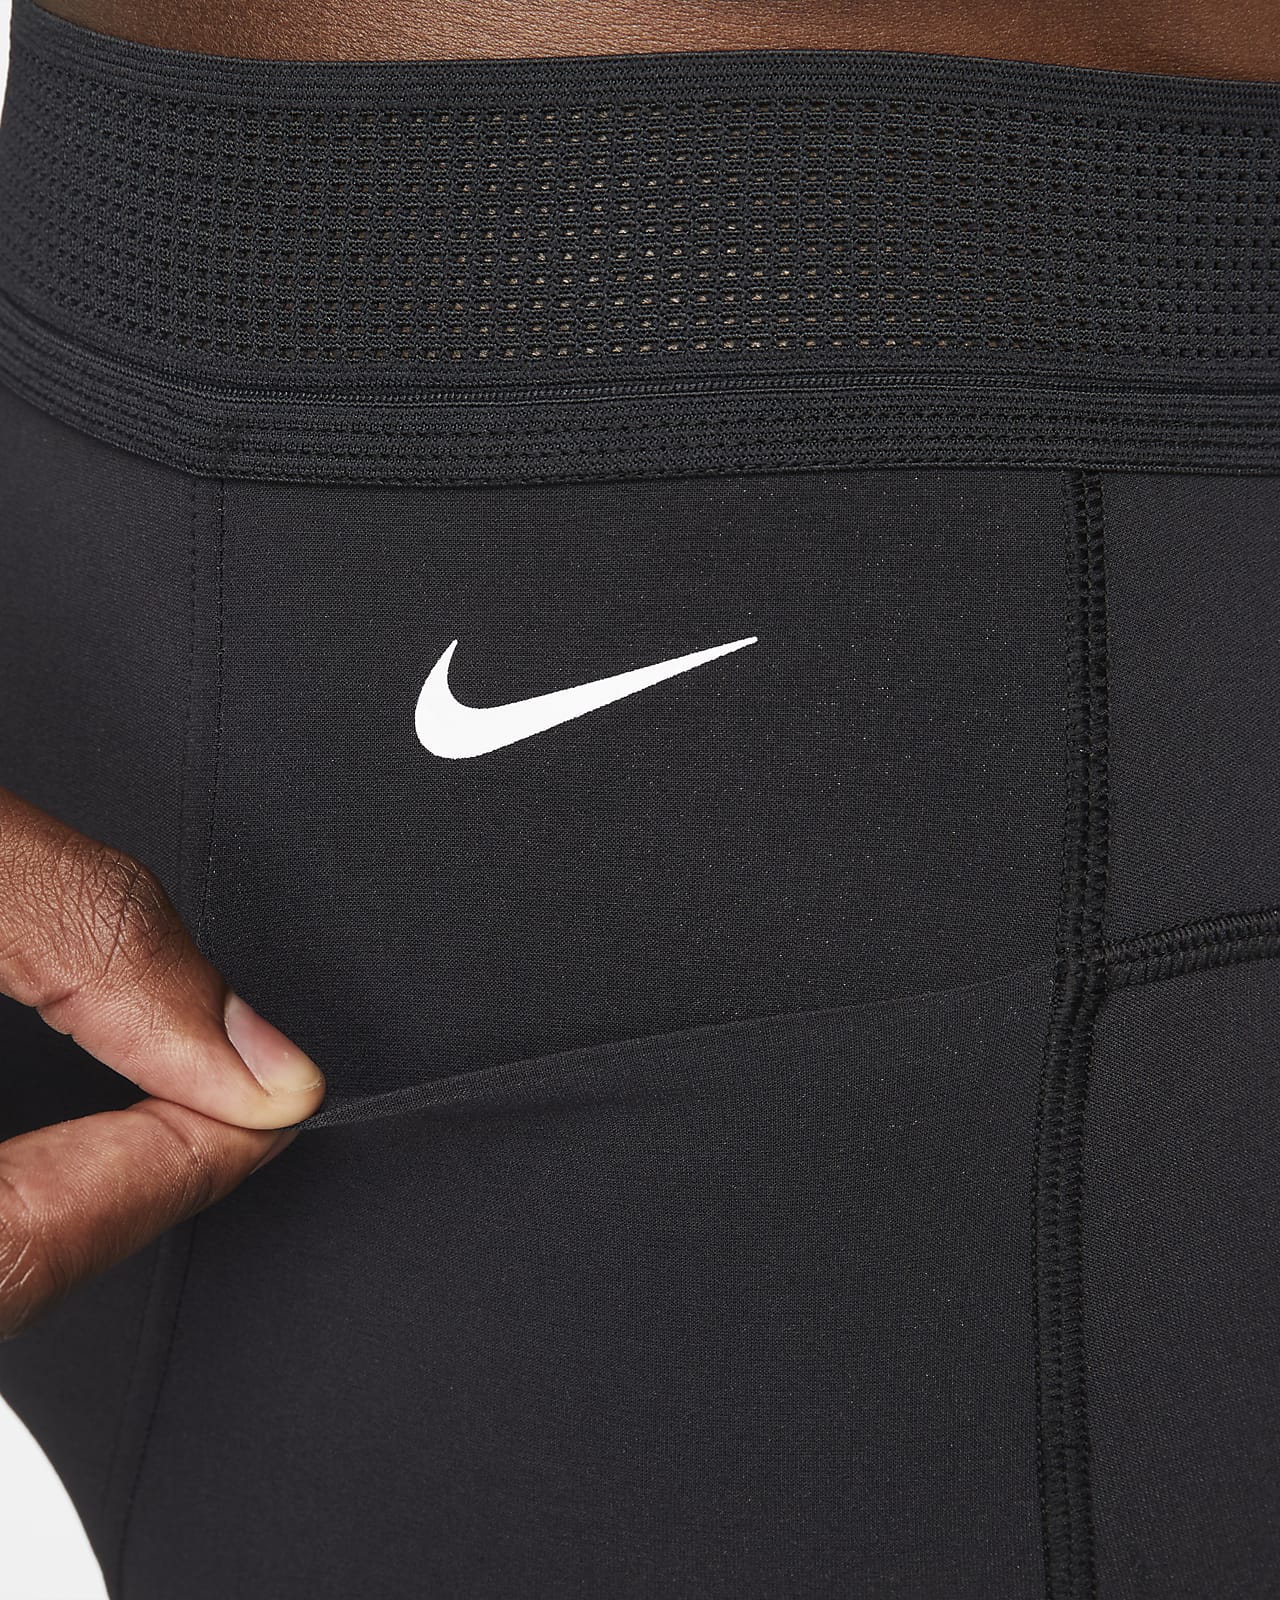 NEW Nike Thermal Dri-Fit Compression Tights Pants - 748868-100 - White -  Medium 